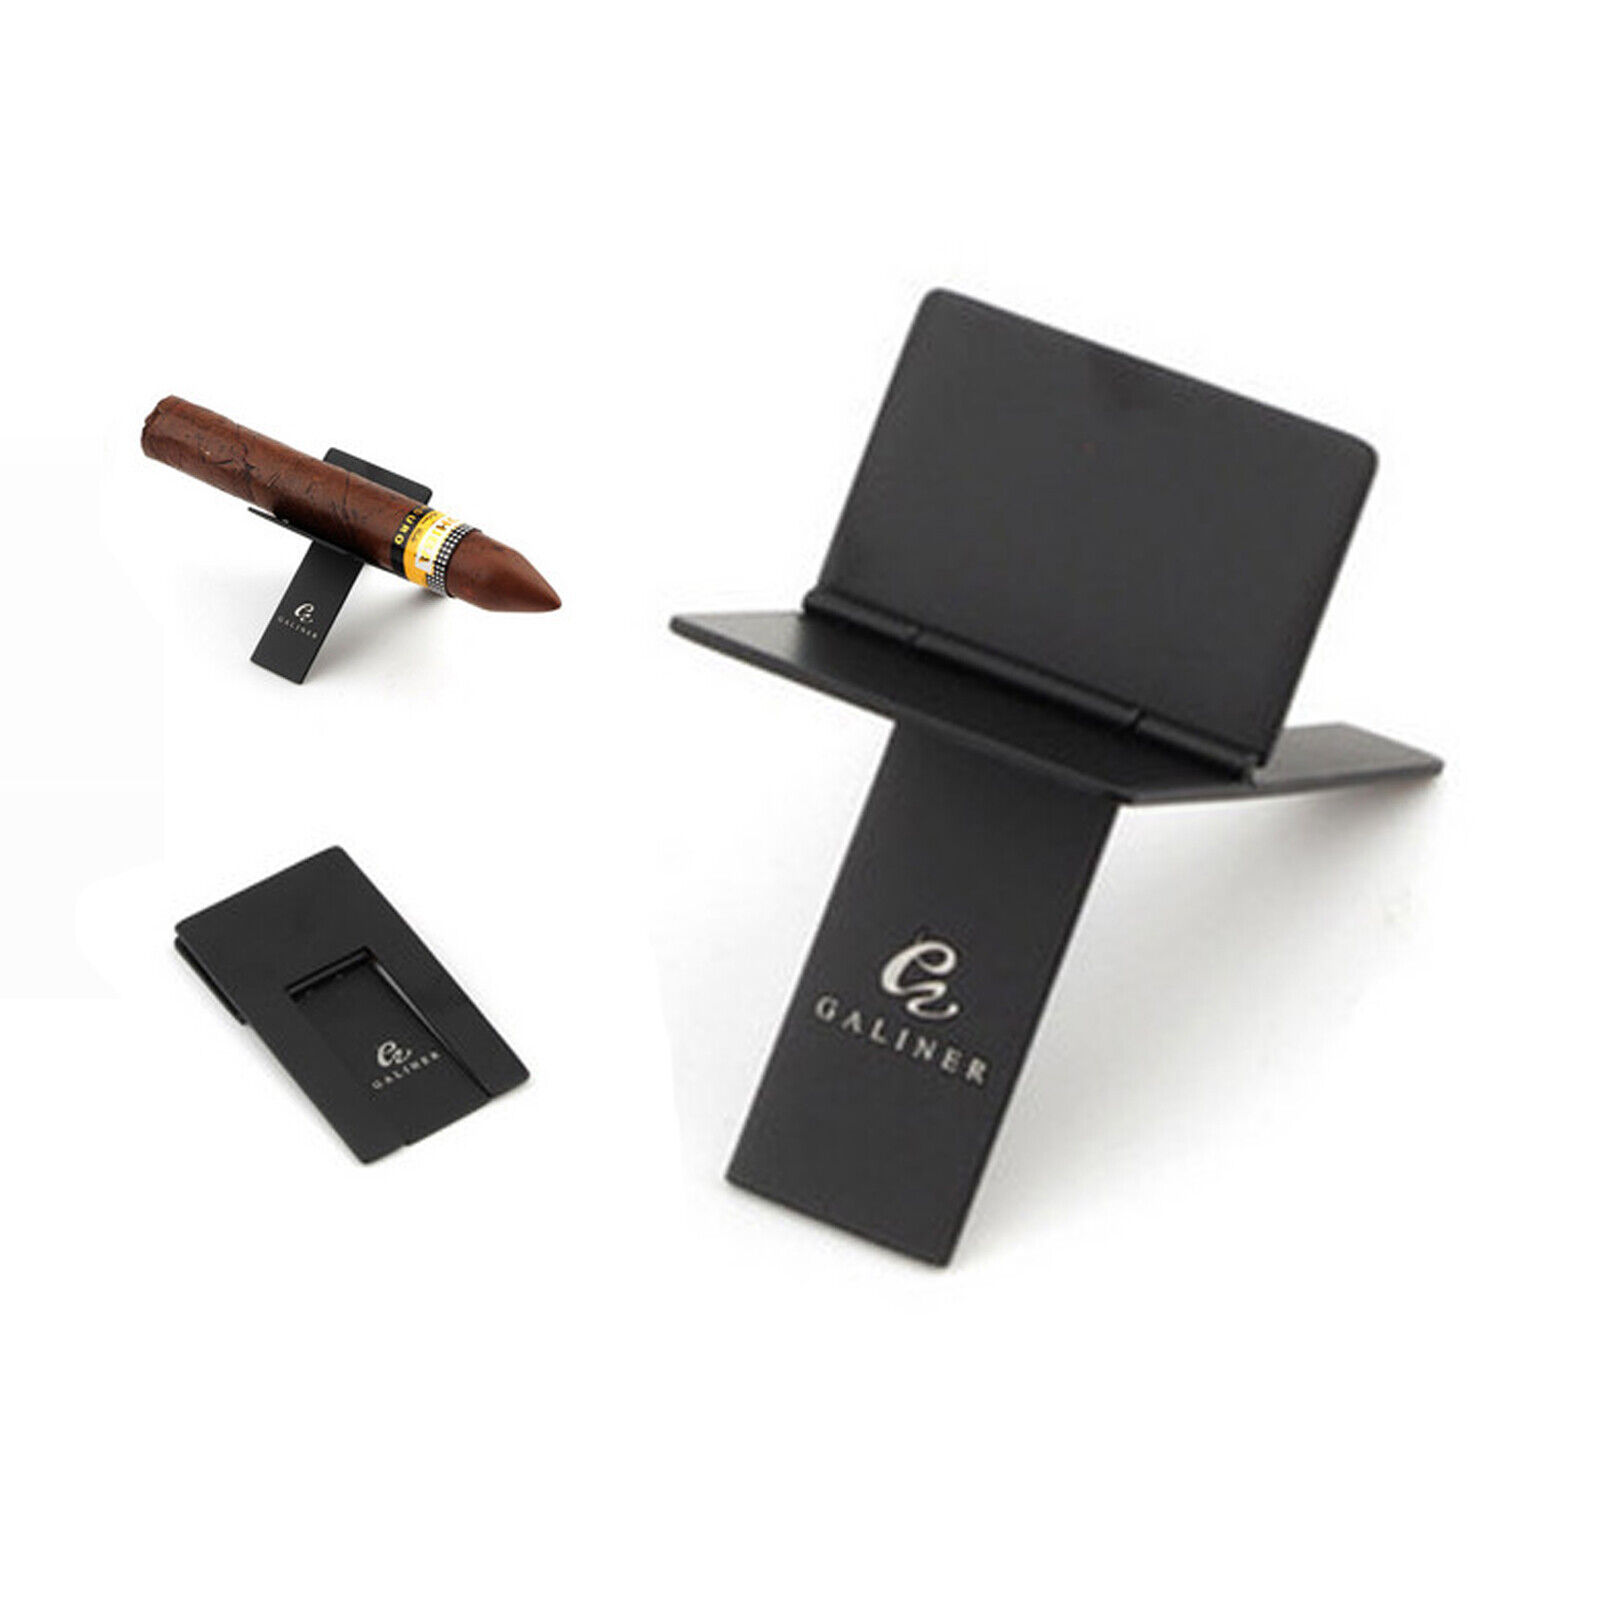 Galiner Travel Cigar Stand Holder Stainless Steel Cigarette Rest Portable Gift